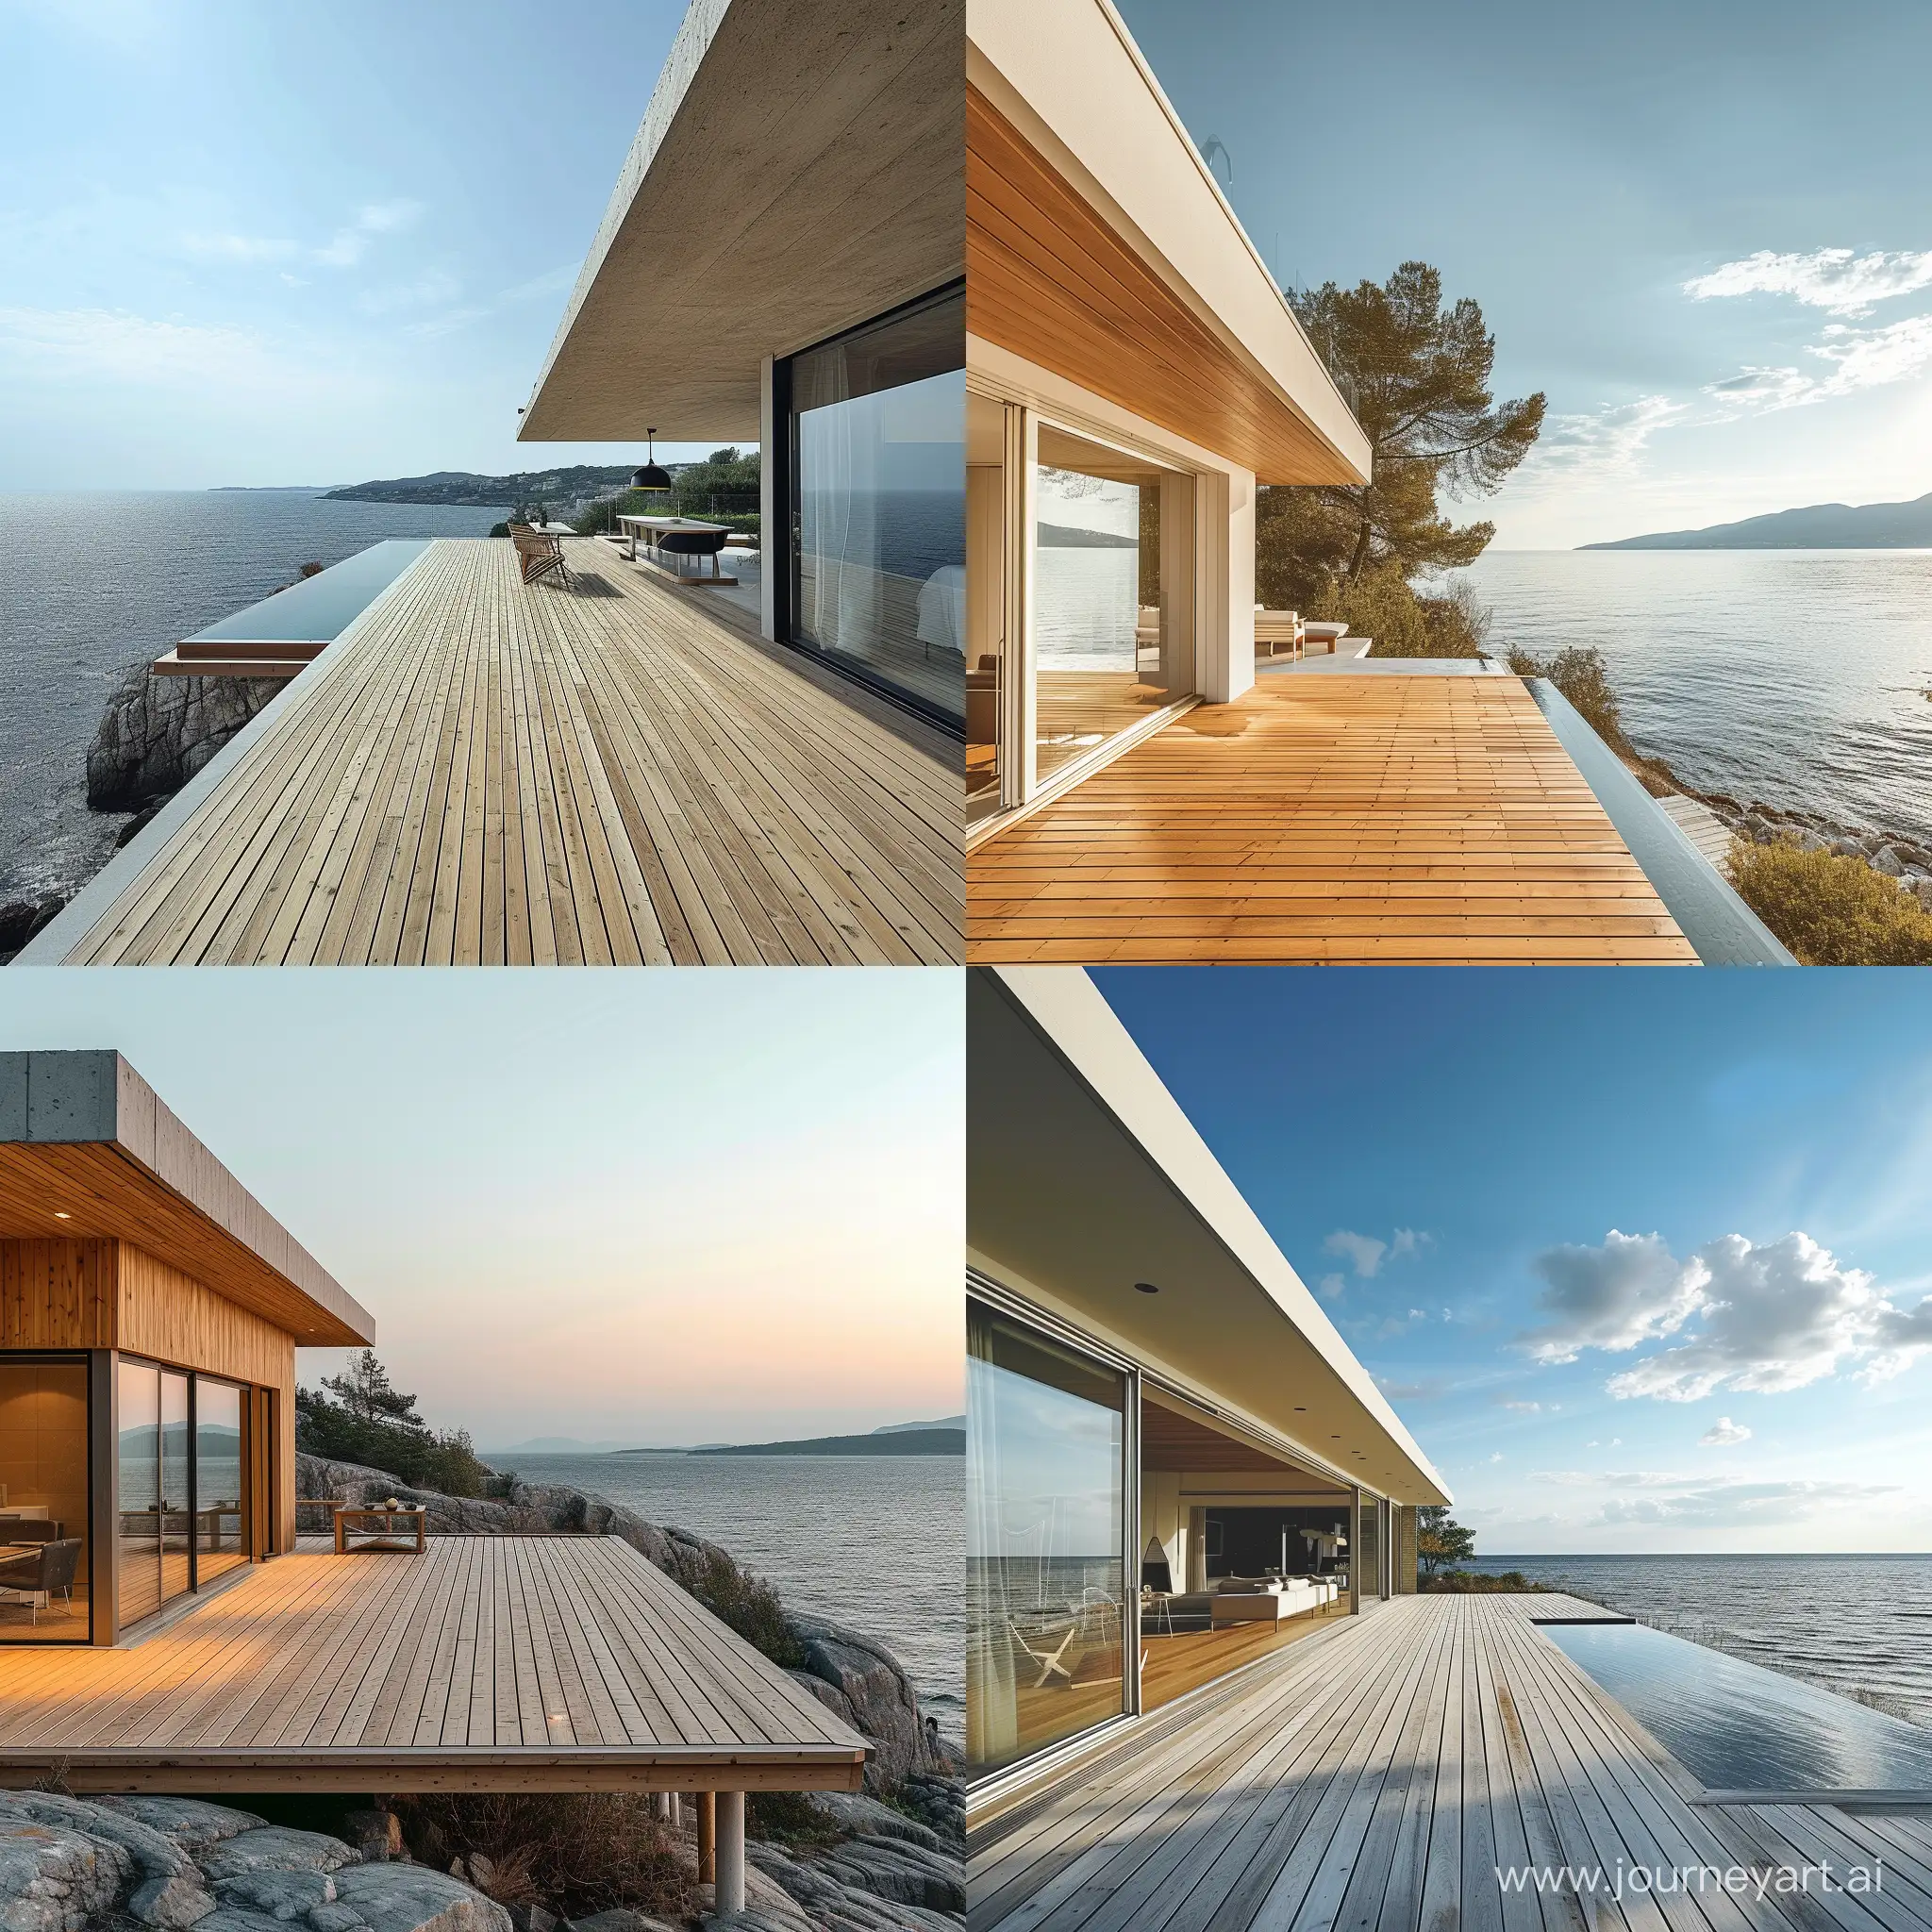 Seaside-Serenity-Wooden-Deck-Facing-the-Sea